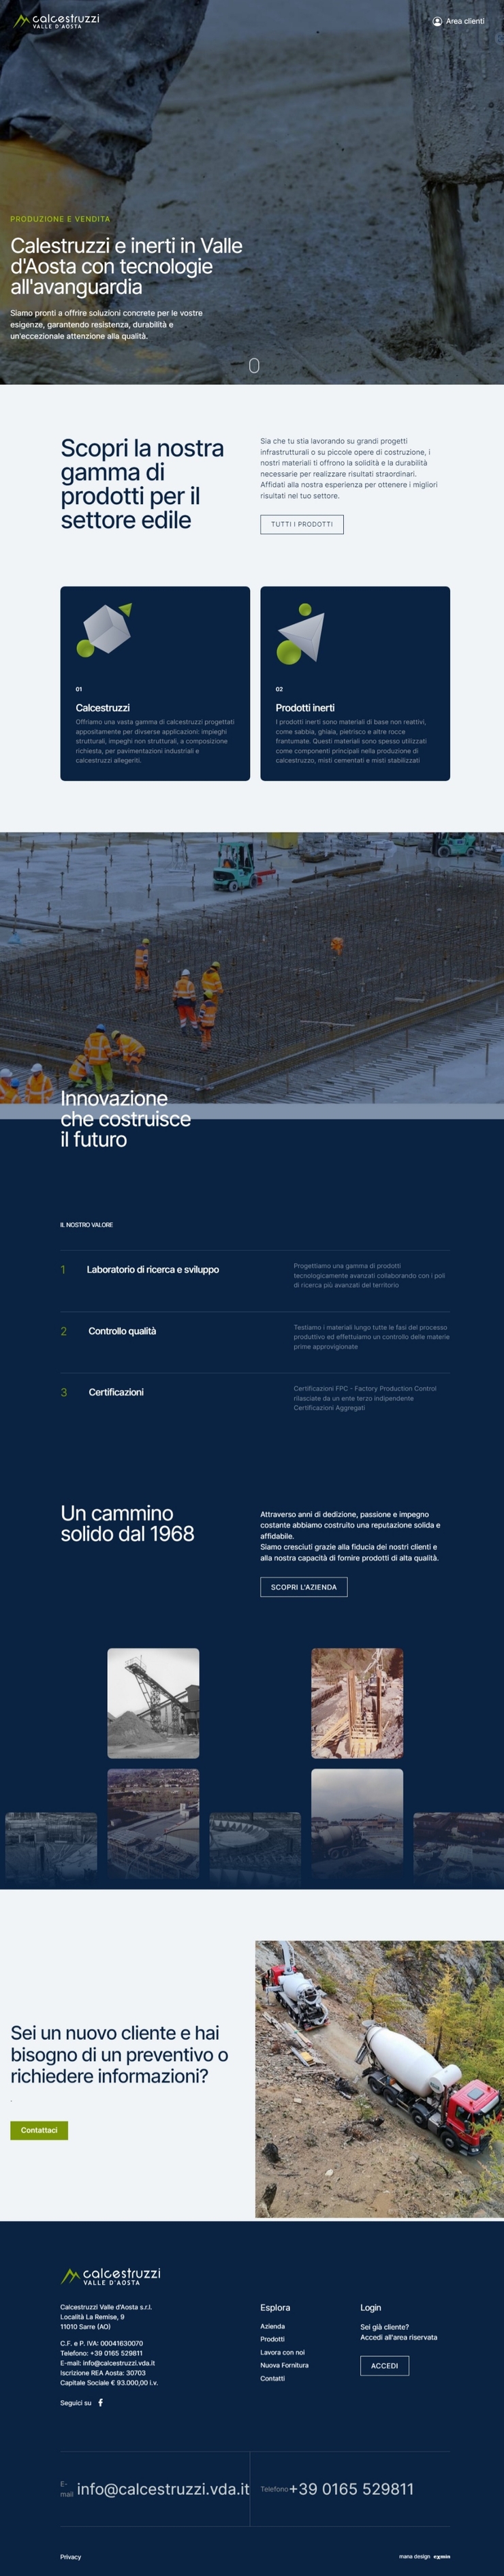 Calcestruzzi Valle d'Aosta s.r.l. - Produzione e vendita di calcestruzzi ed inerti